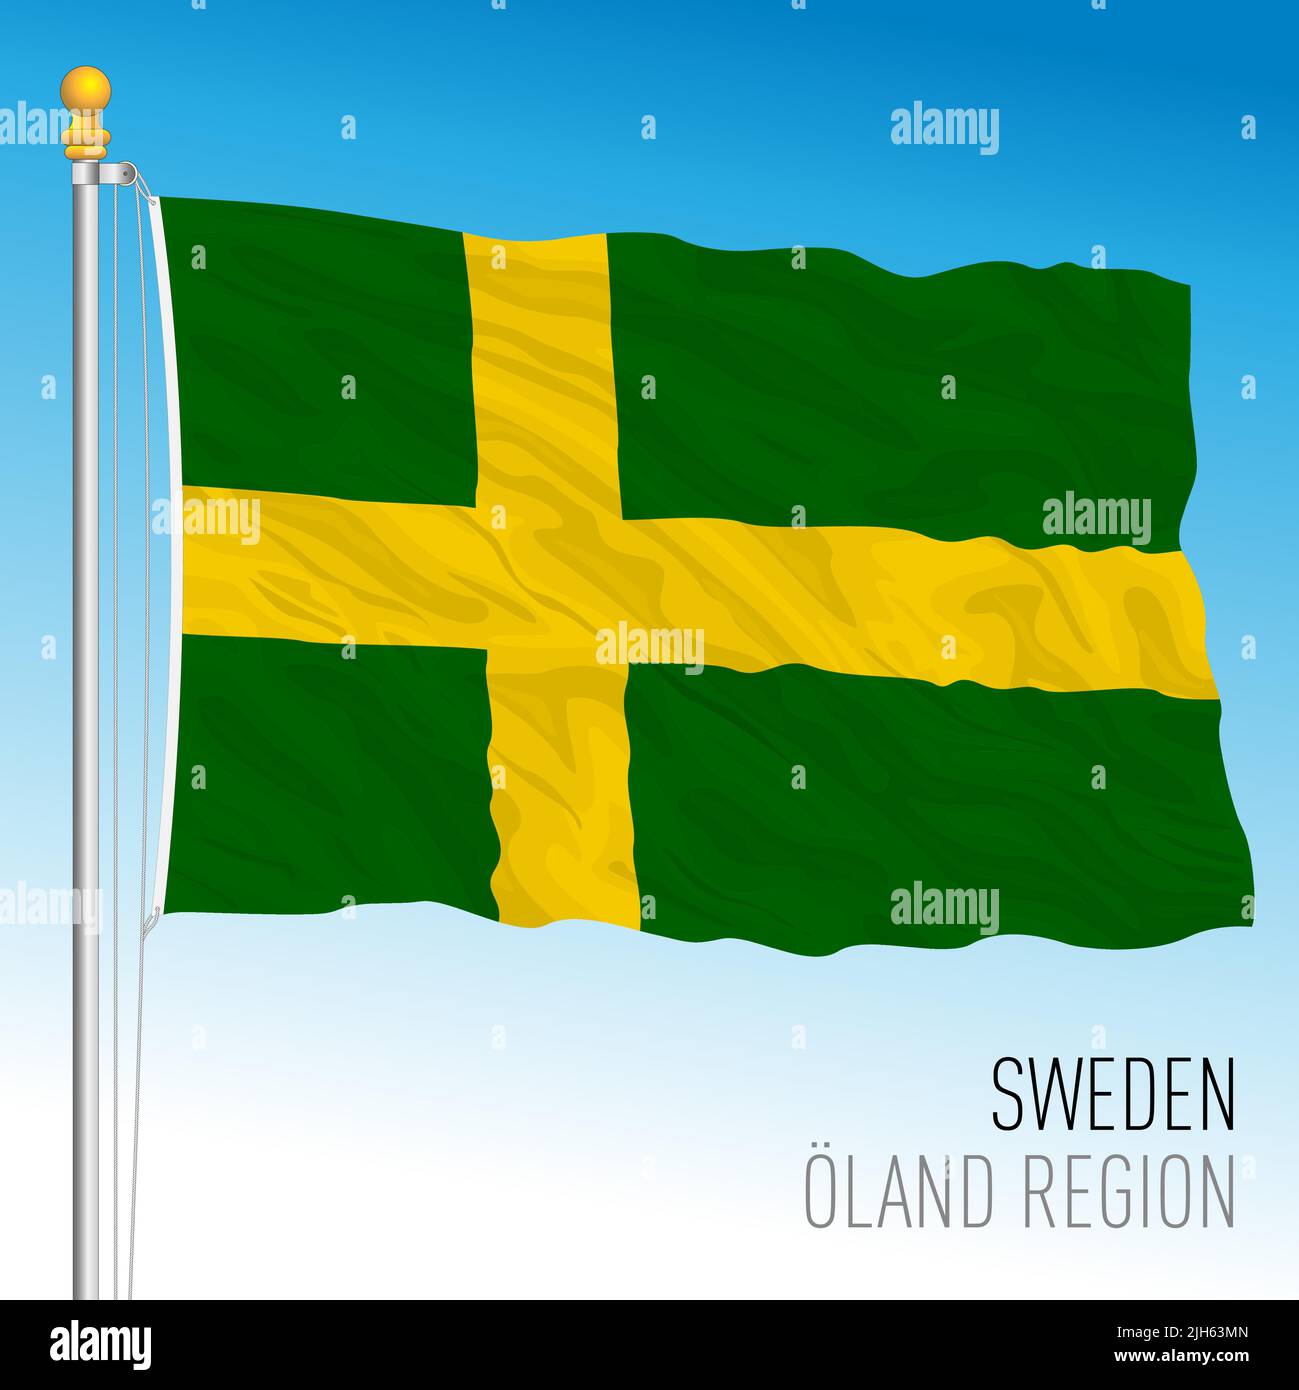 Oland regional flag, Kingdom of Sweden, vector illustration Stock Vector